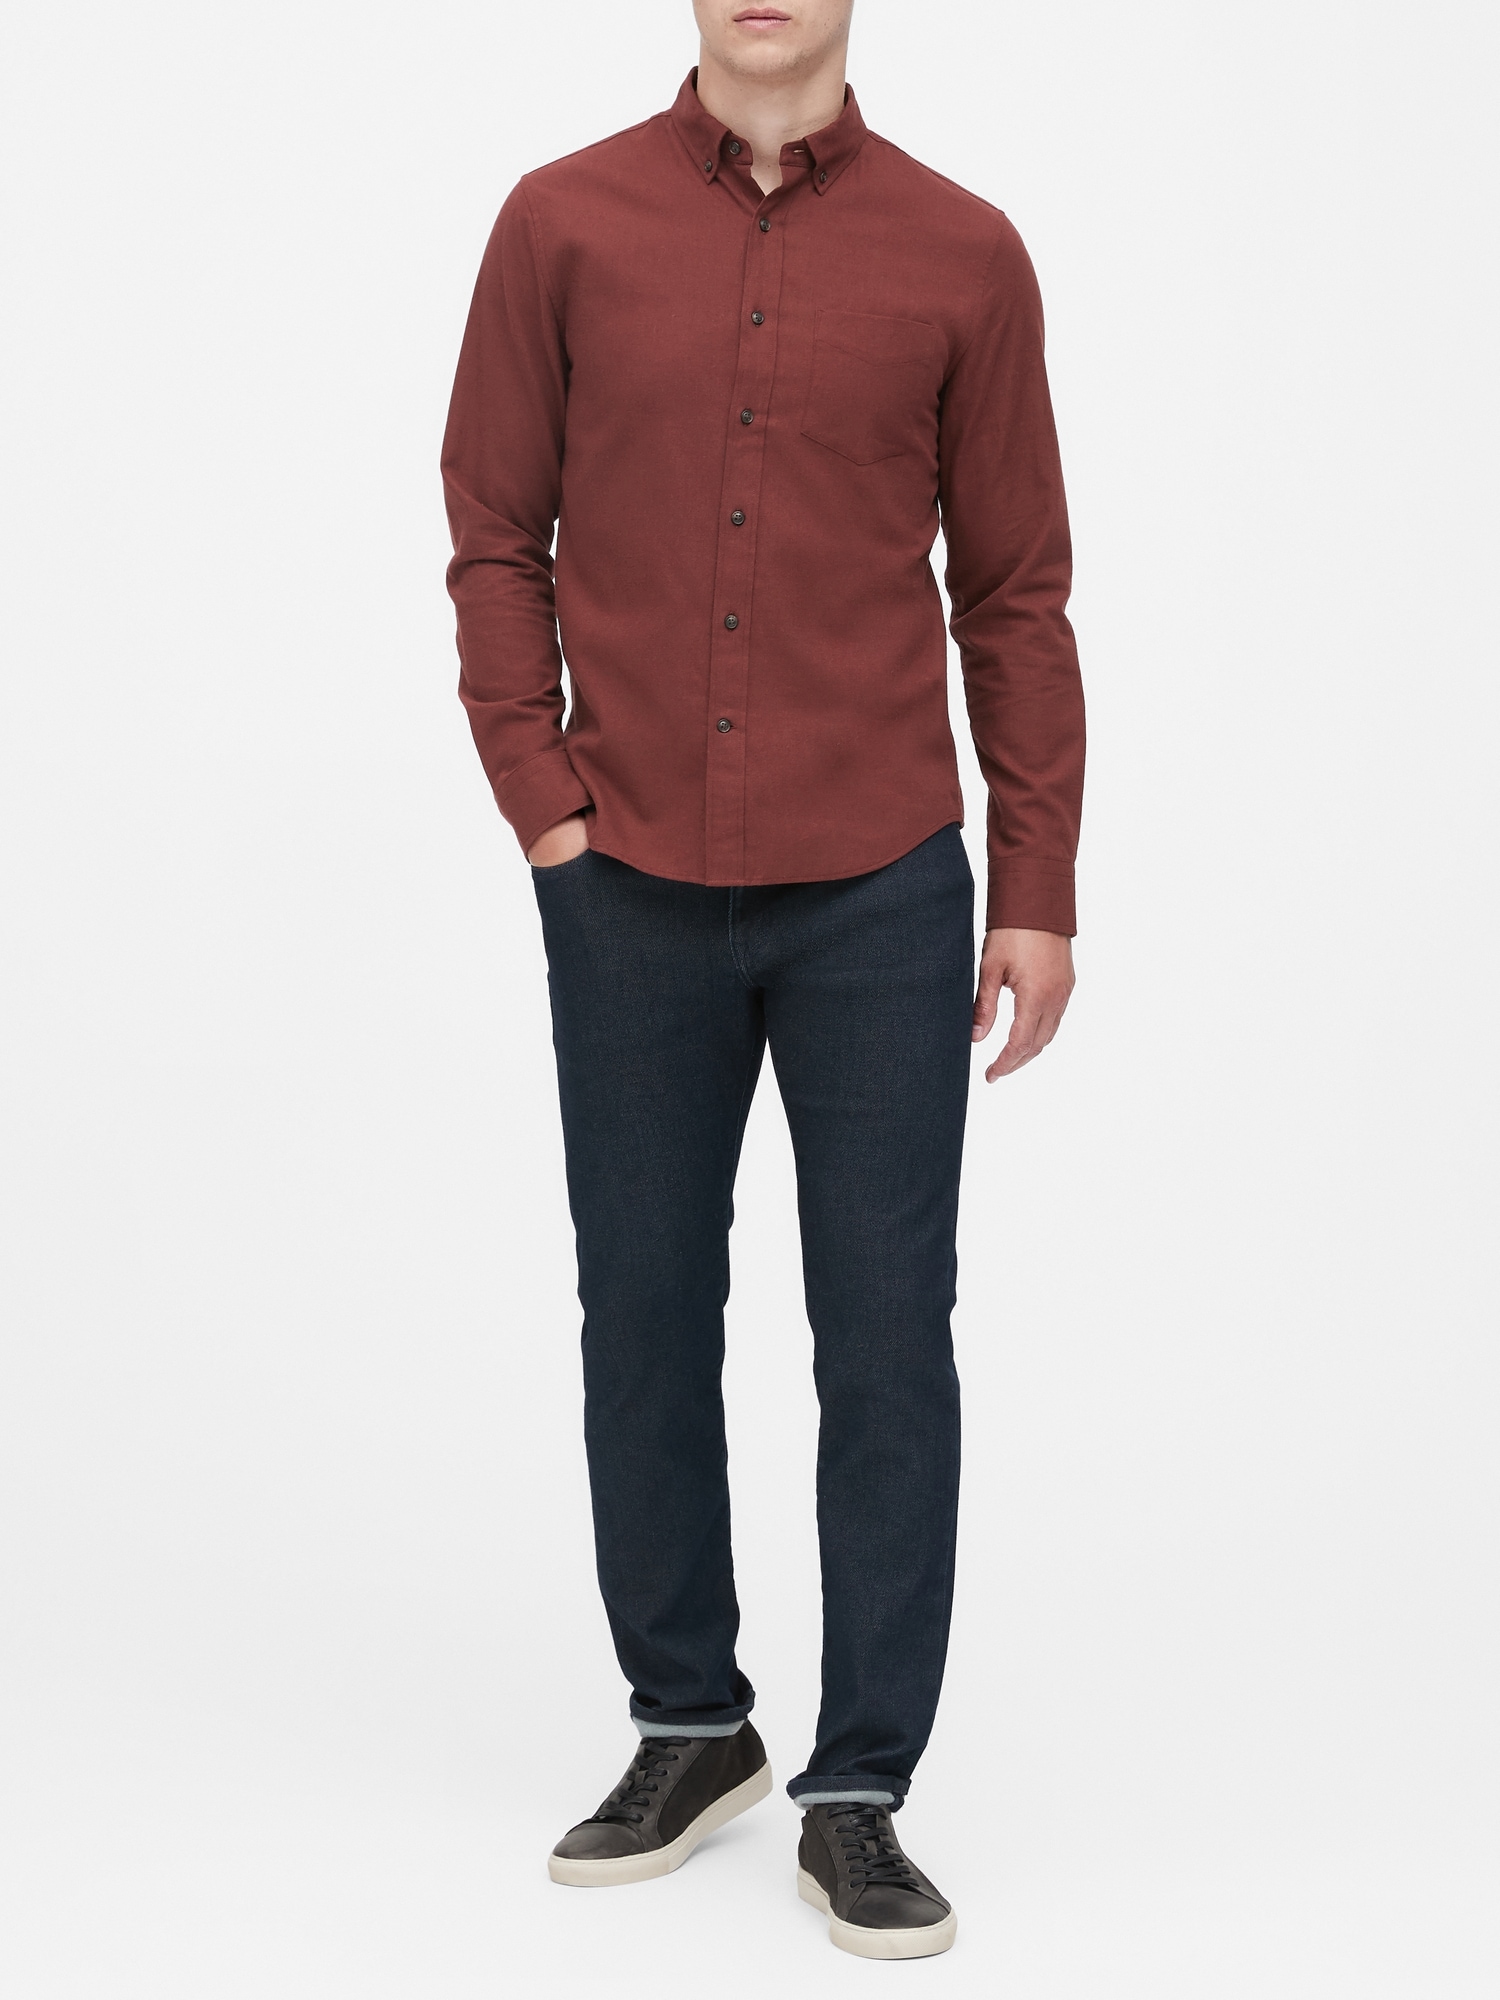 Untucked Slim-Fit Flannel Shirt